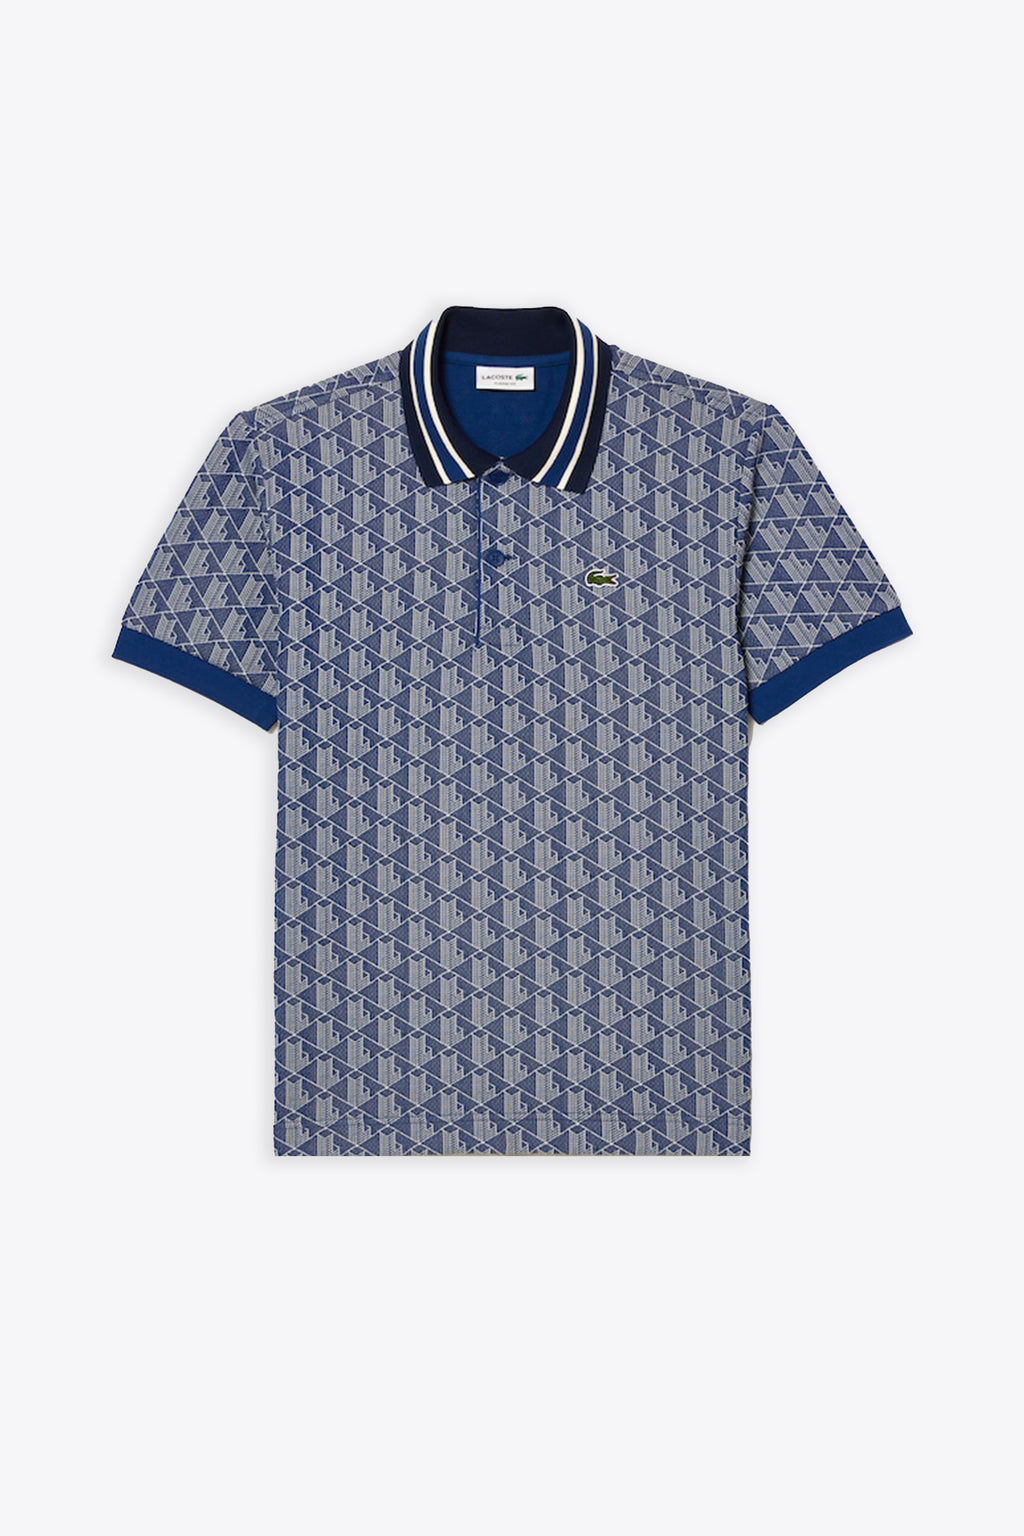 alt-image__Blue-polo-shirt-with-jacquard-motif-